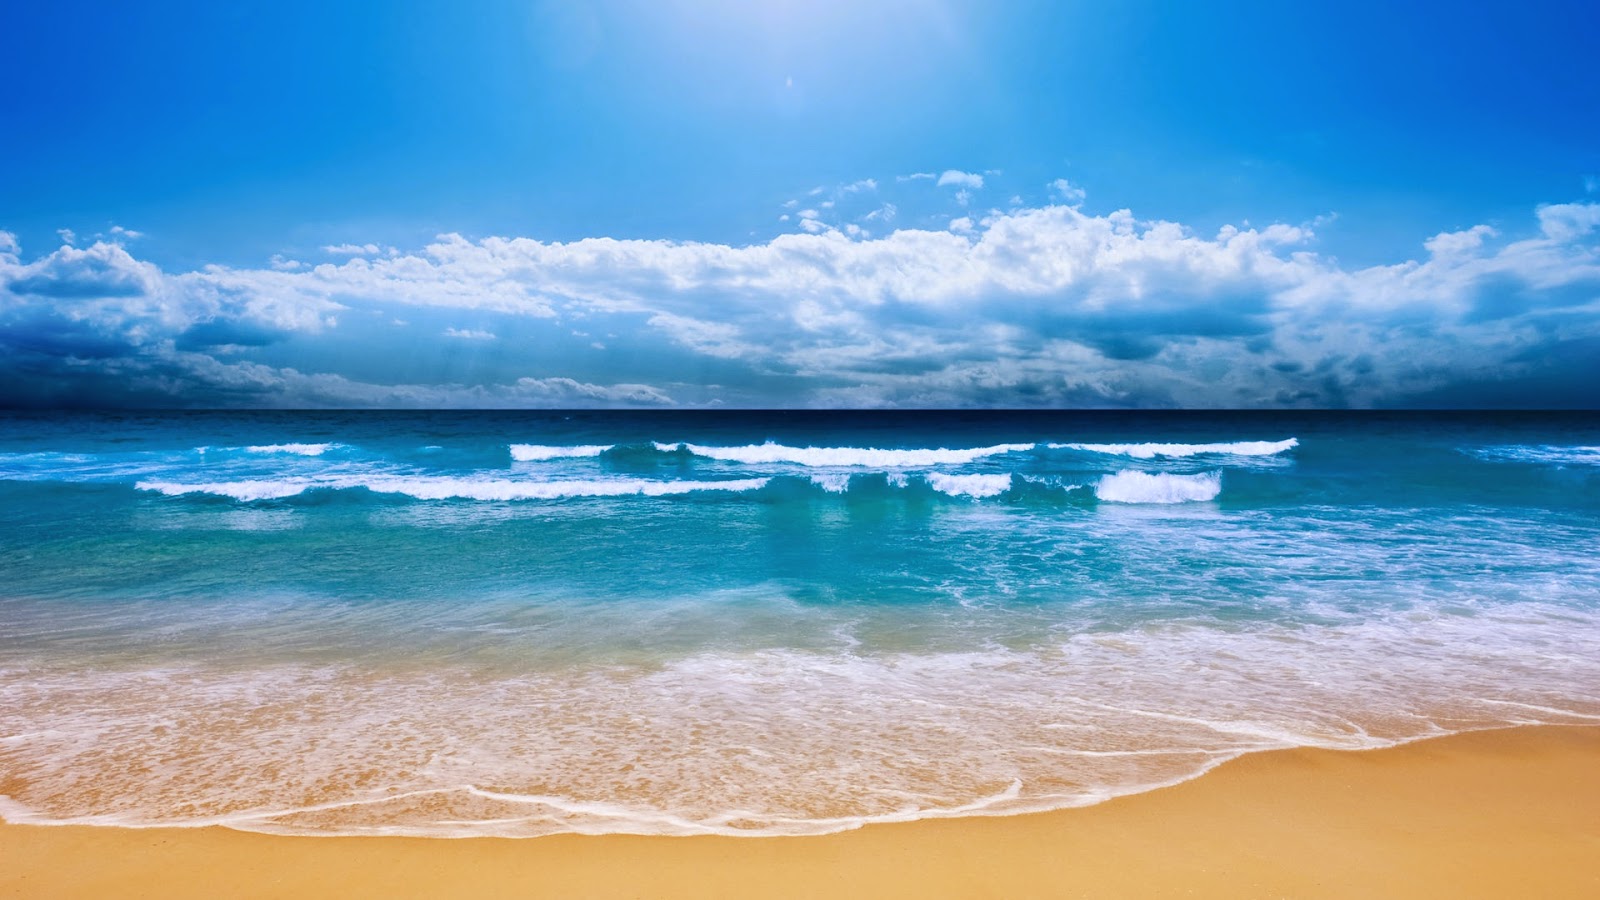 #uh8b336 Most Beautiful Beaches Desktop Wallpaper - Hd Wallpapers 1080p Playa - HD Wallpaper 